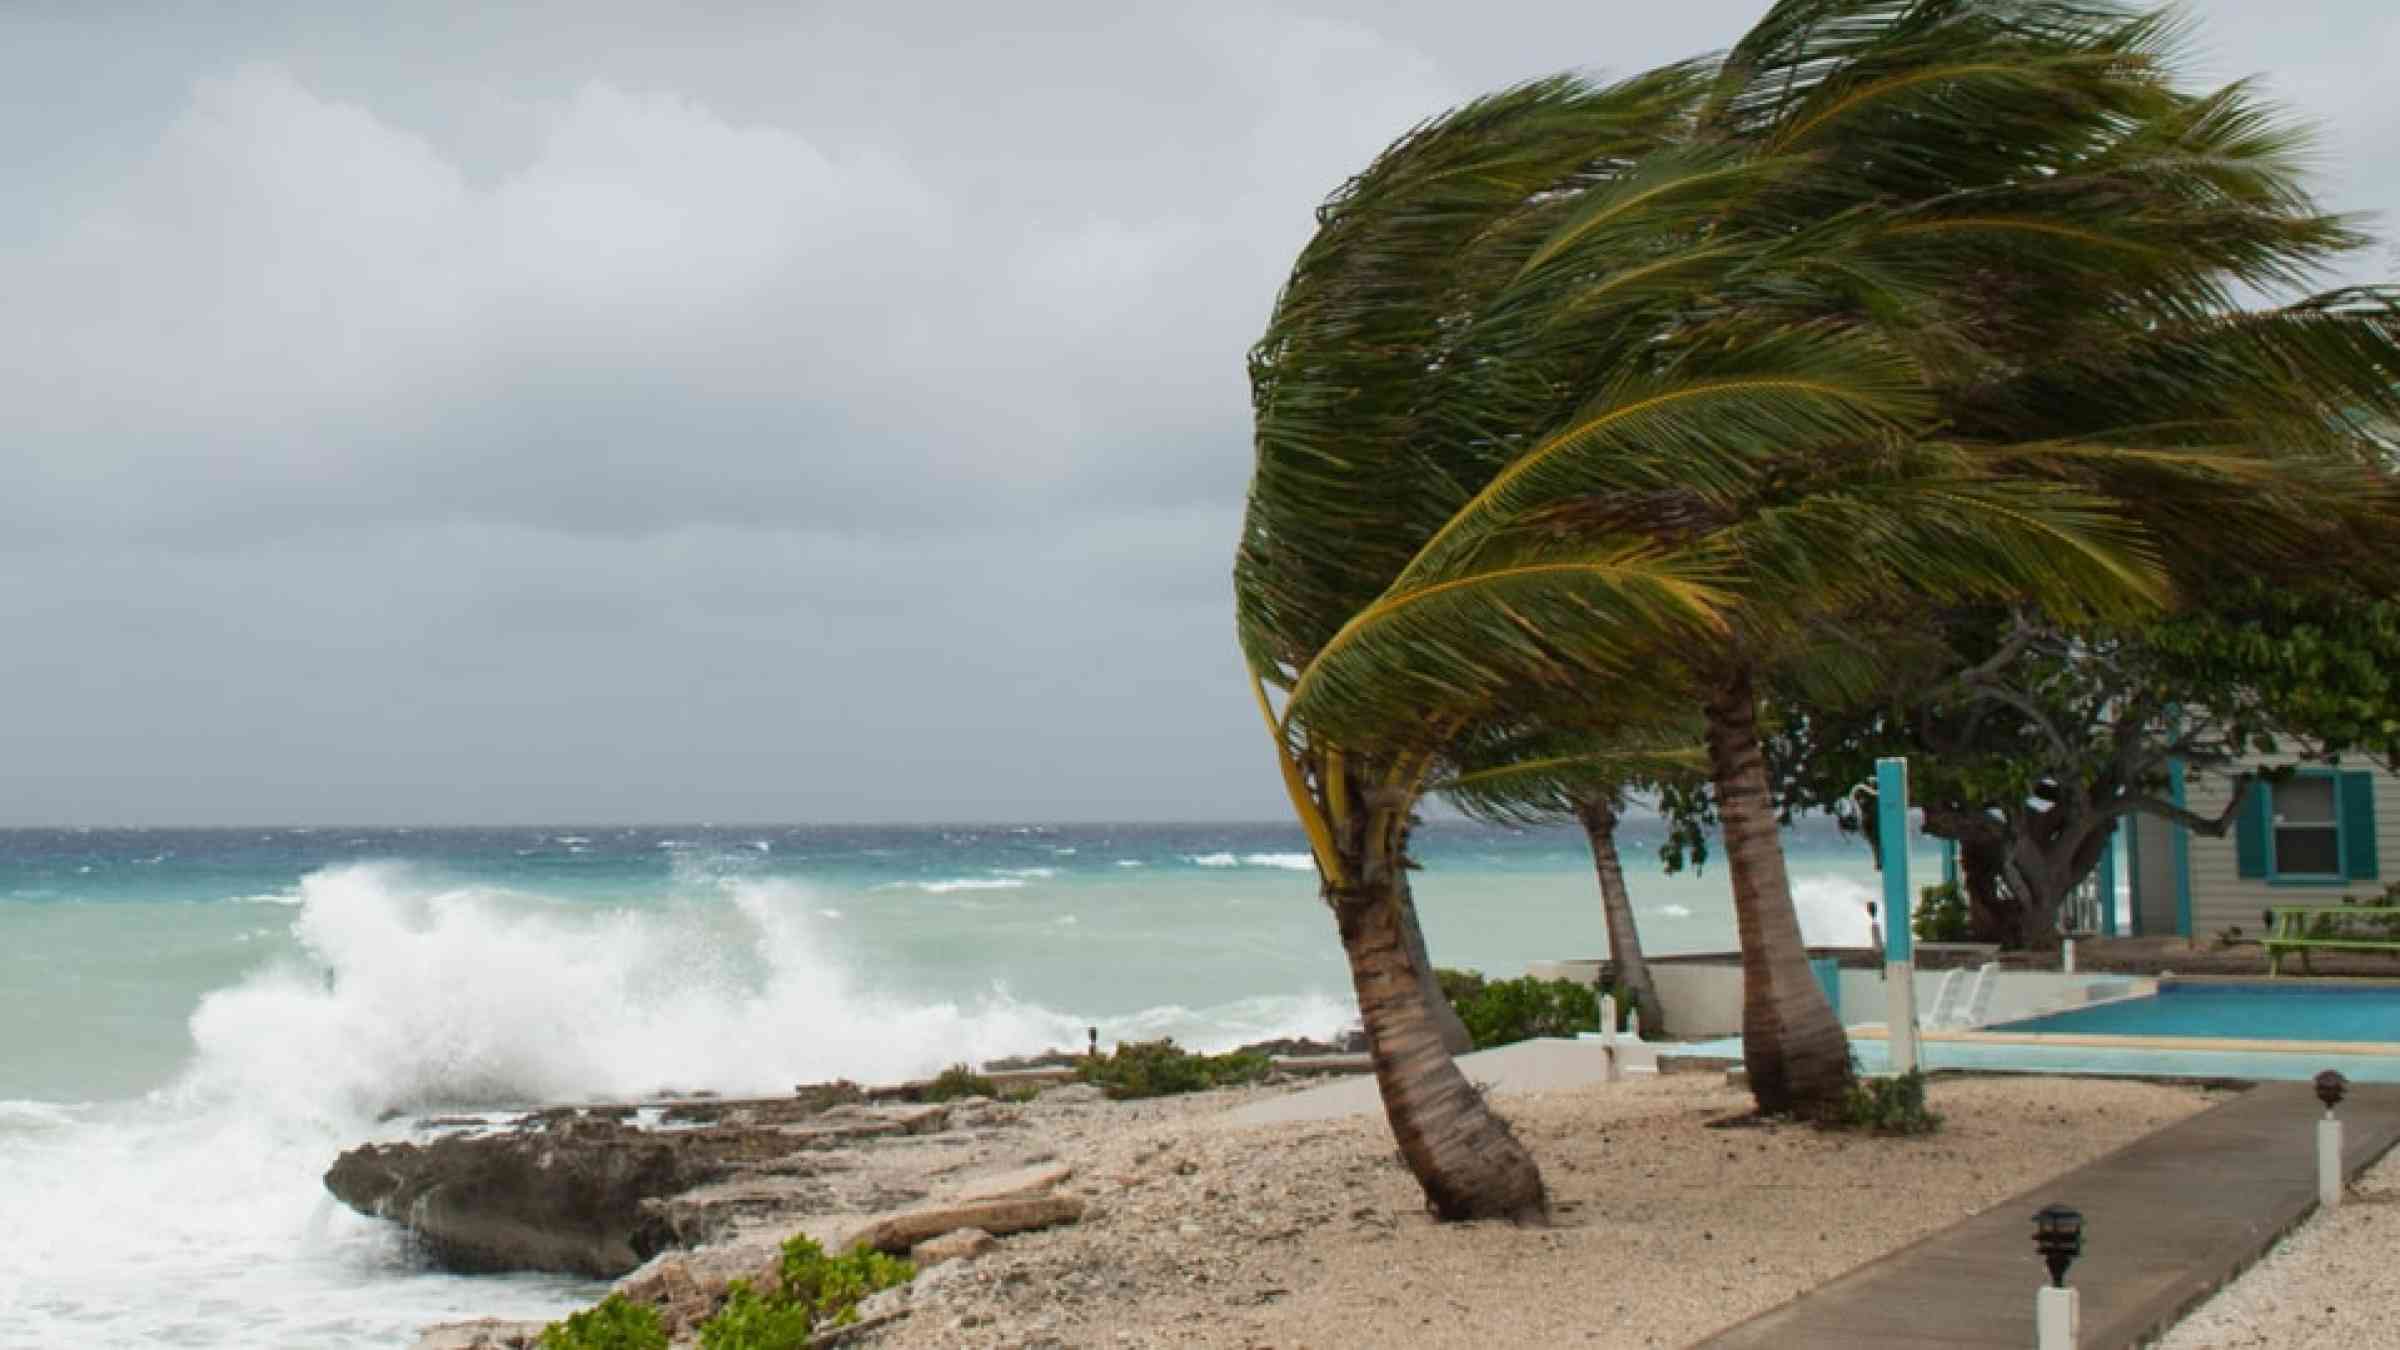 Hurricane winds battering a coast